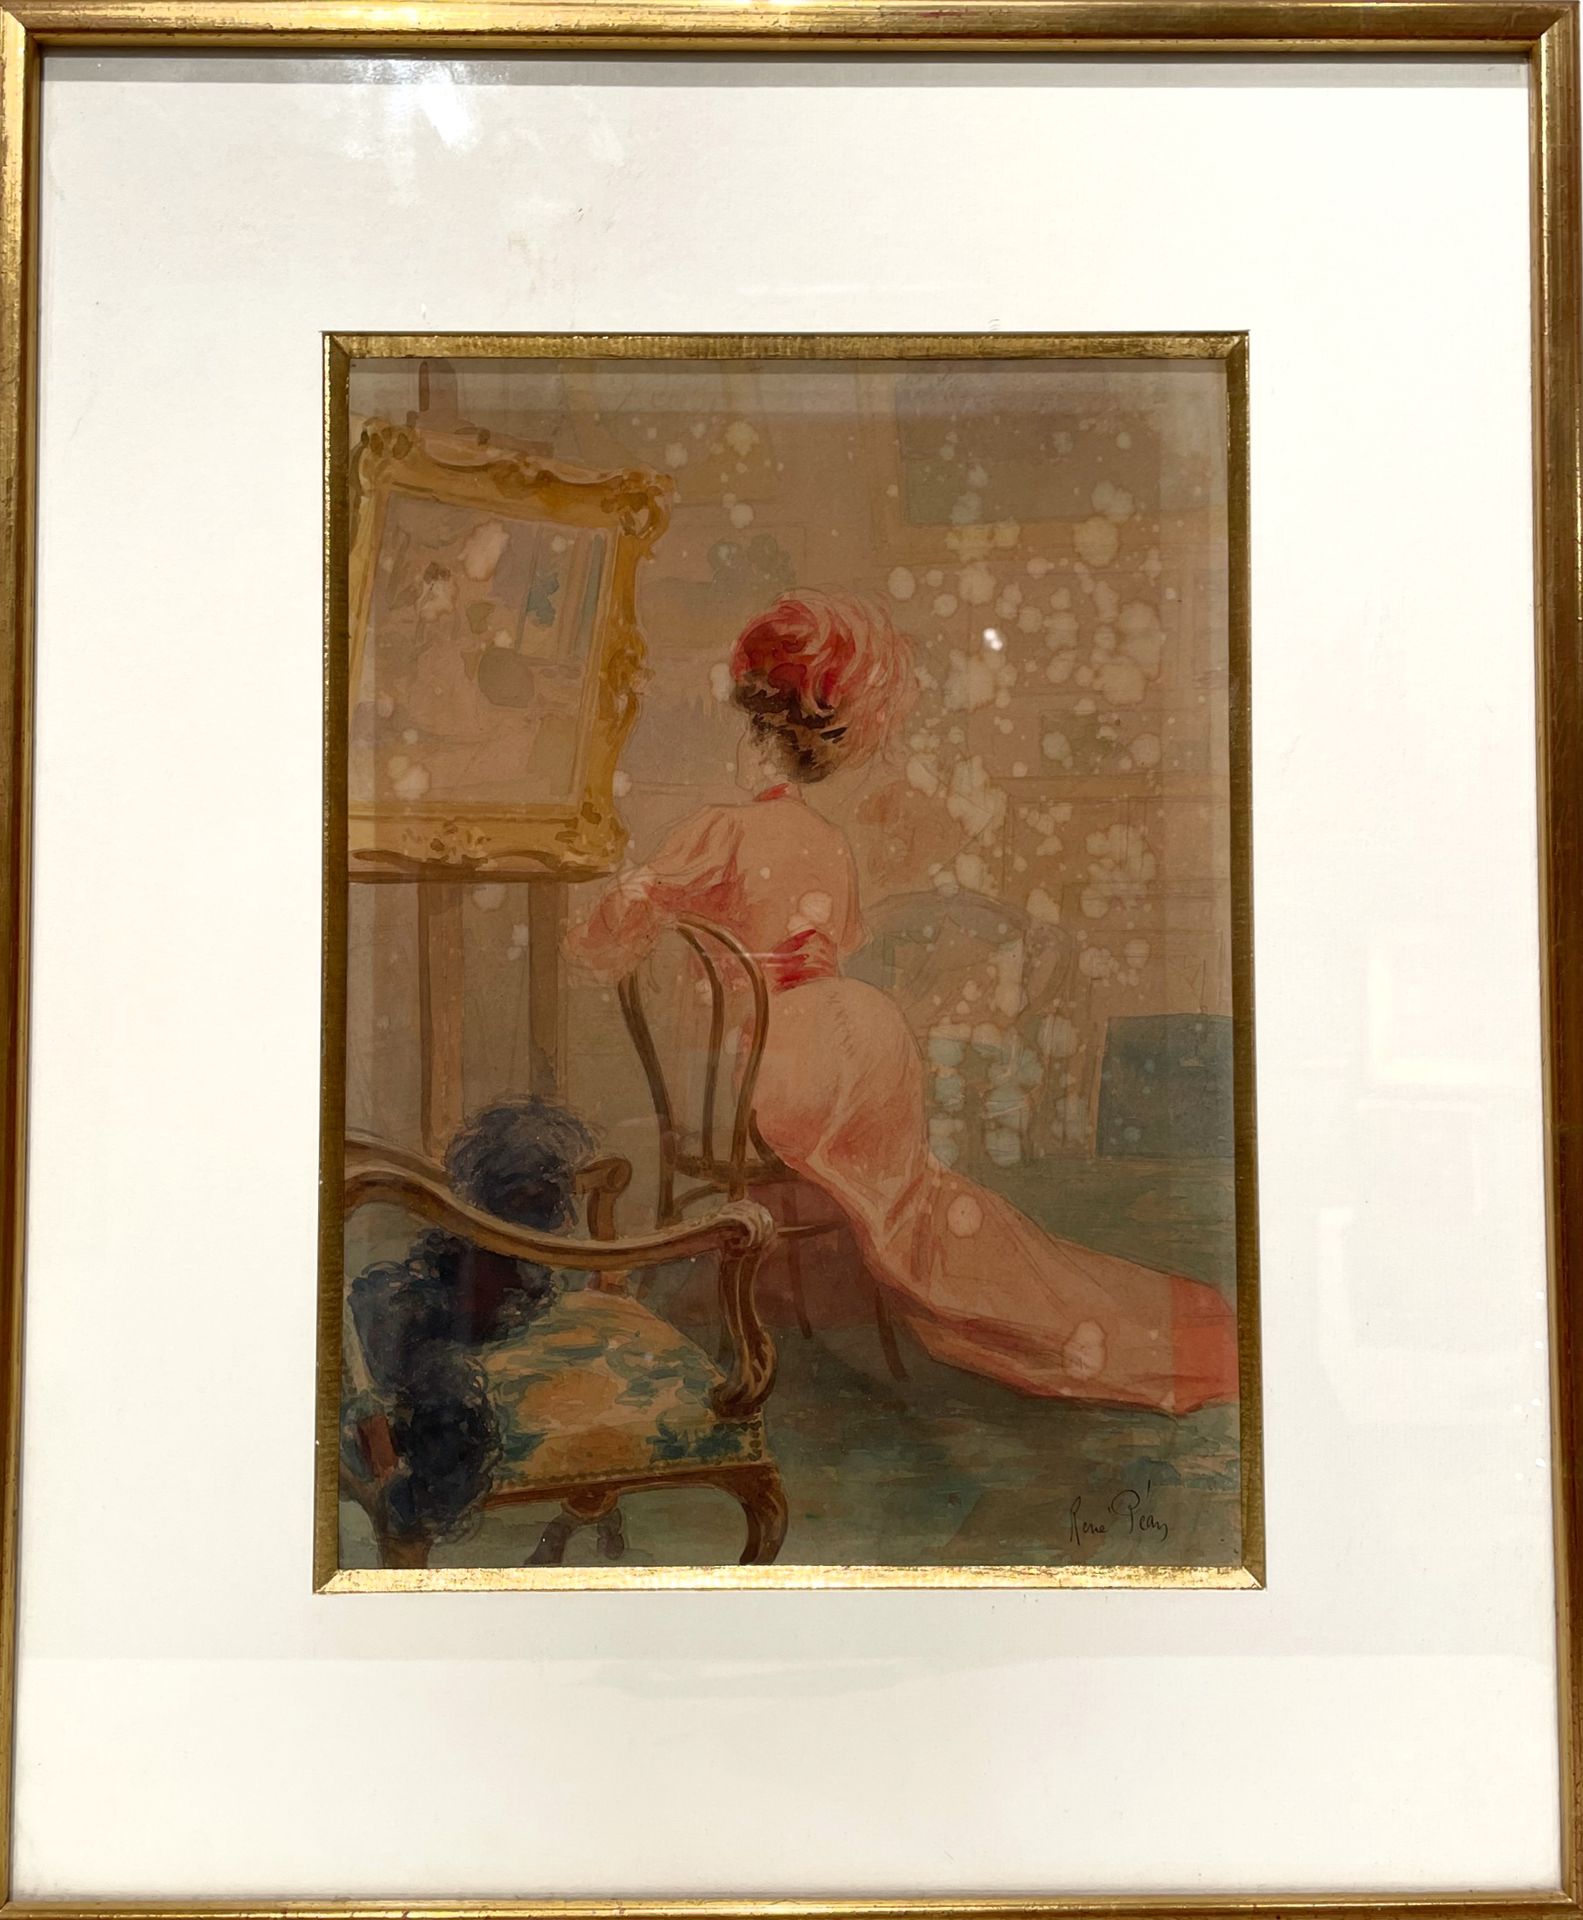 Null René PÉAN (1875-1955)

Galante admirando un cuadro 

Acuarela 

30x22 cm